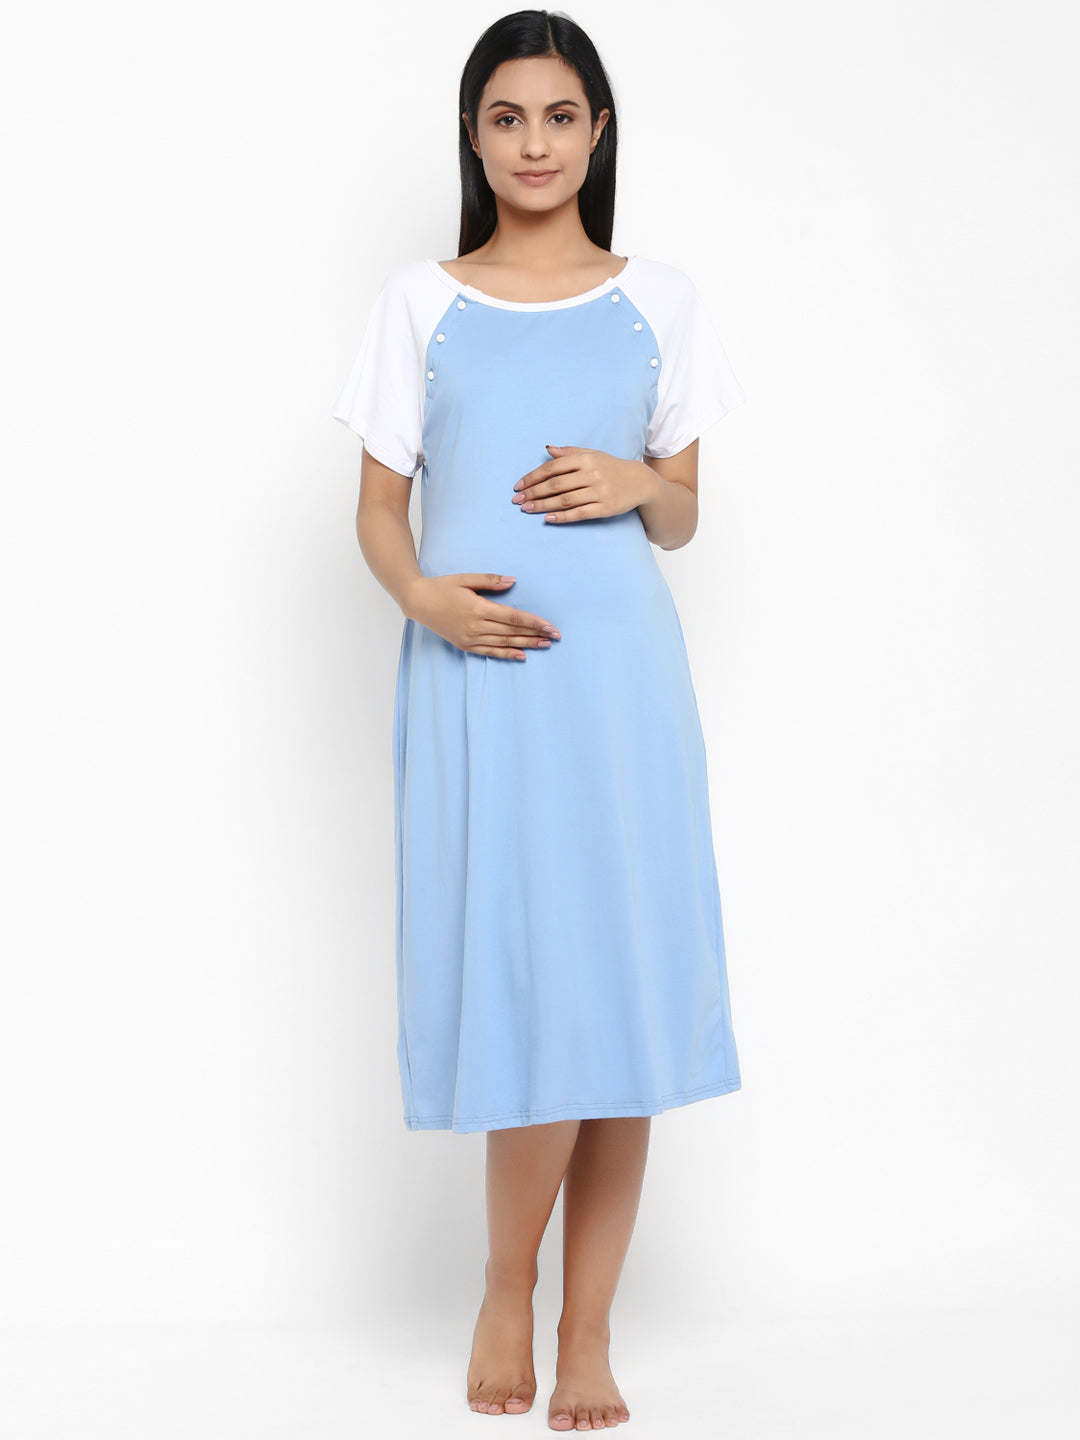 Women's Nursing Nightgown Labor Delivery Gown Hospital Maternity Sleepwear  Breastfeeding Night Dress